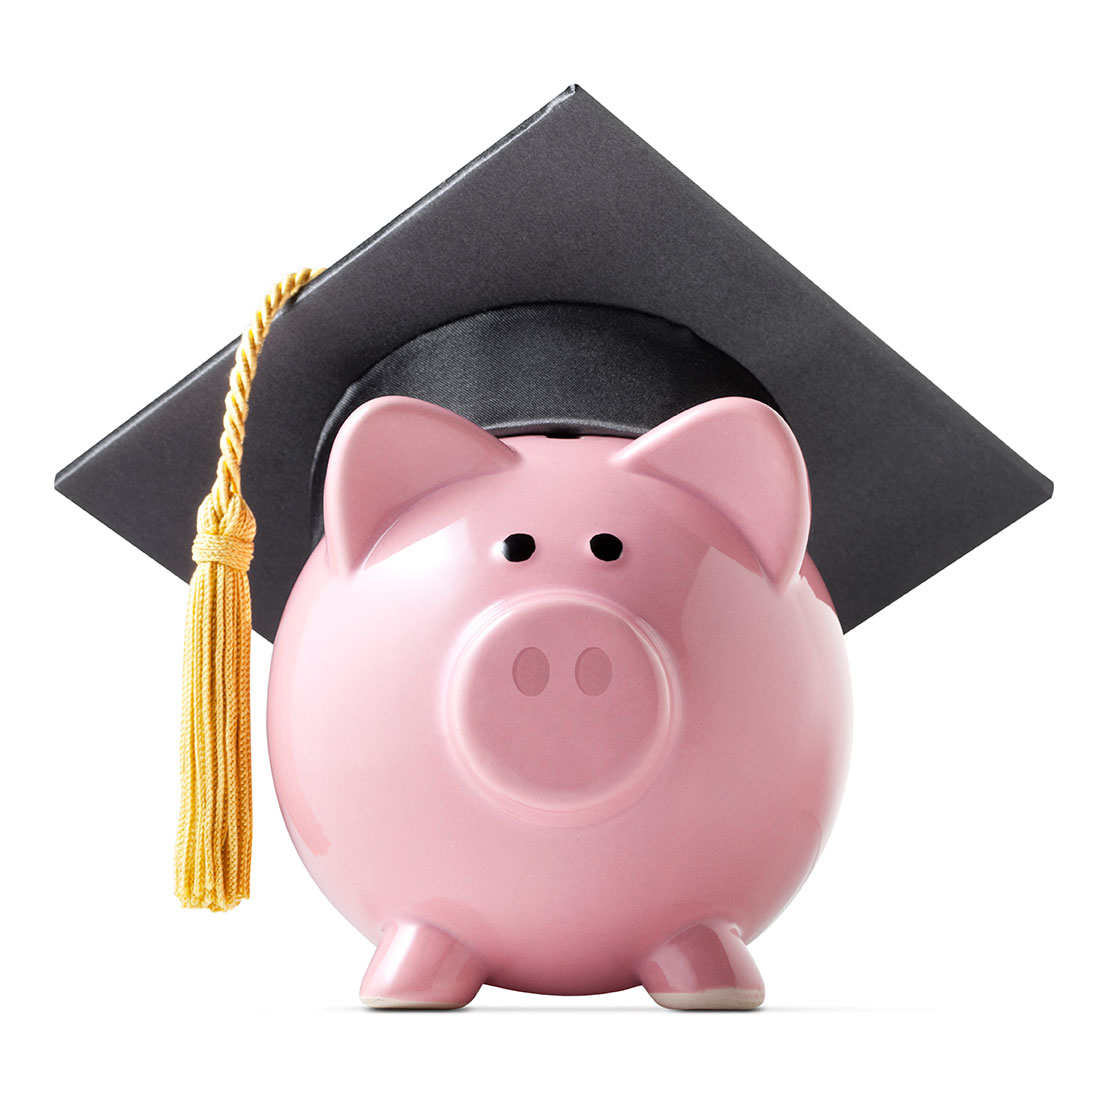 Piggy Bank wearing graduation cap